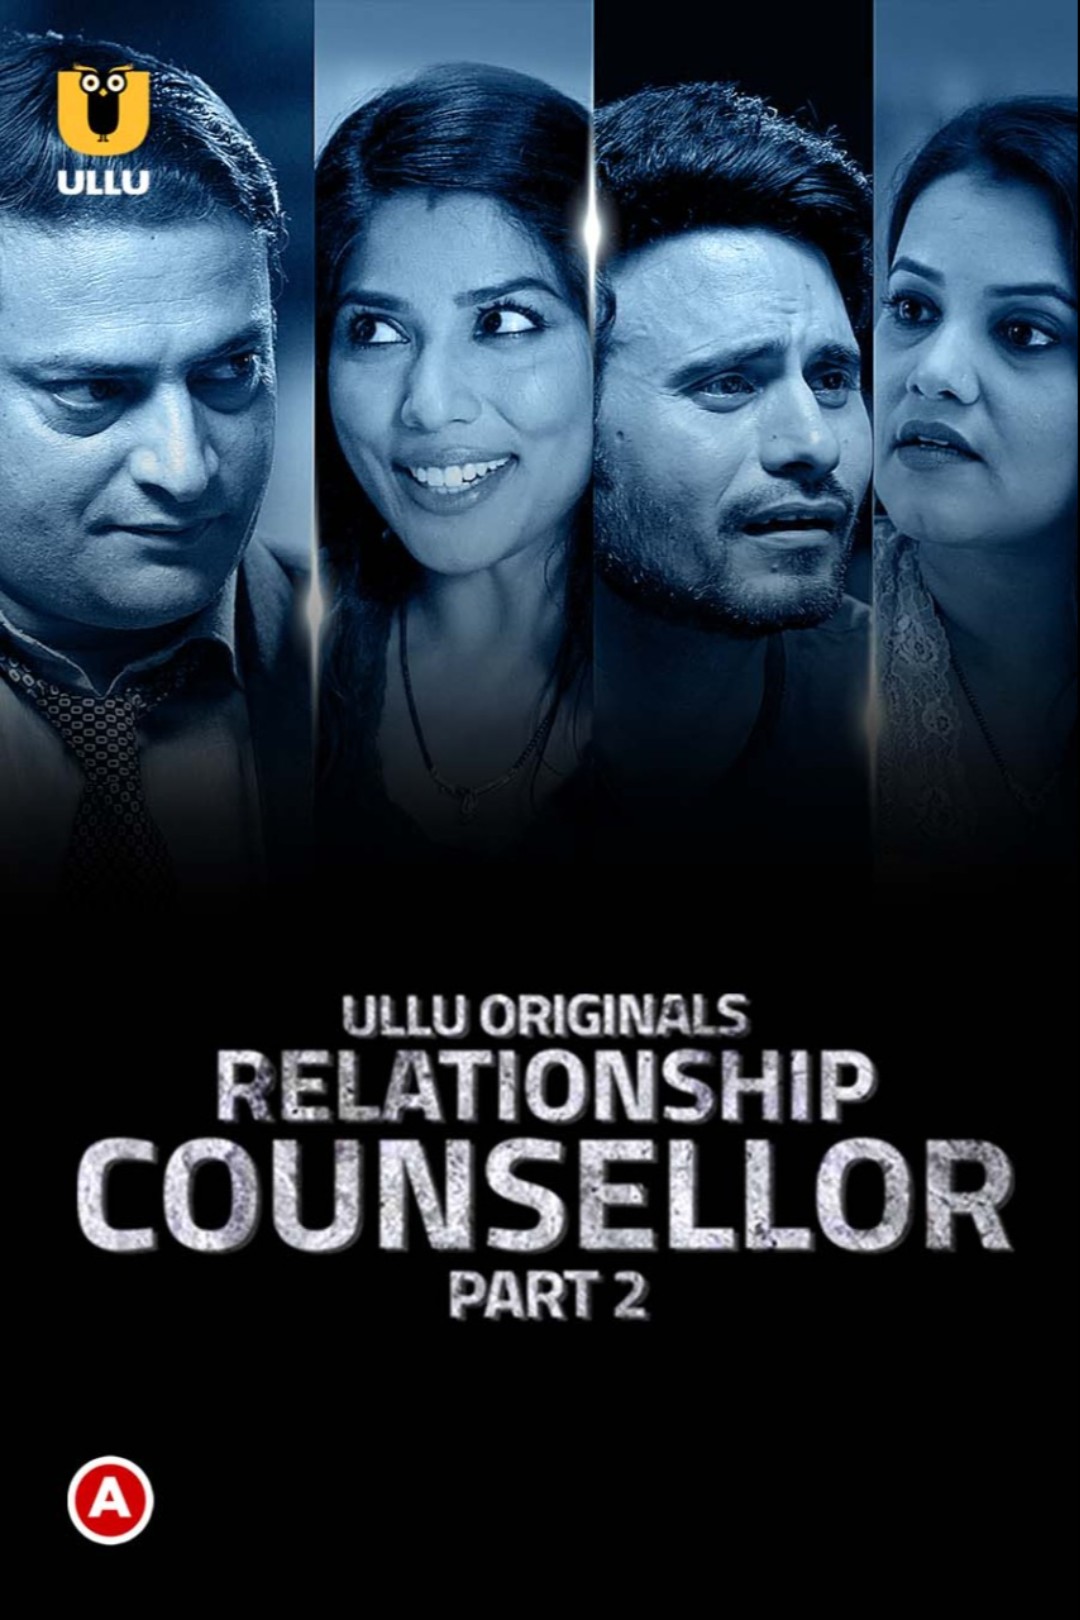 18+ Relationship Counsellor (Part 2) 2021 S01 Hindi Ullu Originals Complete Web Series 720p HDRip 350MB x264 AAC